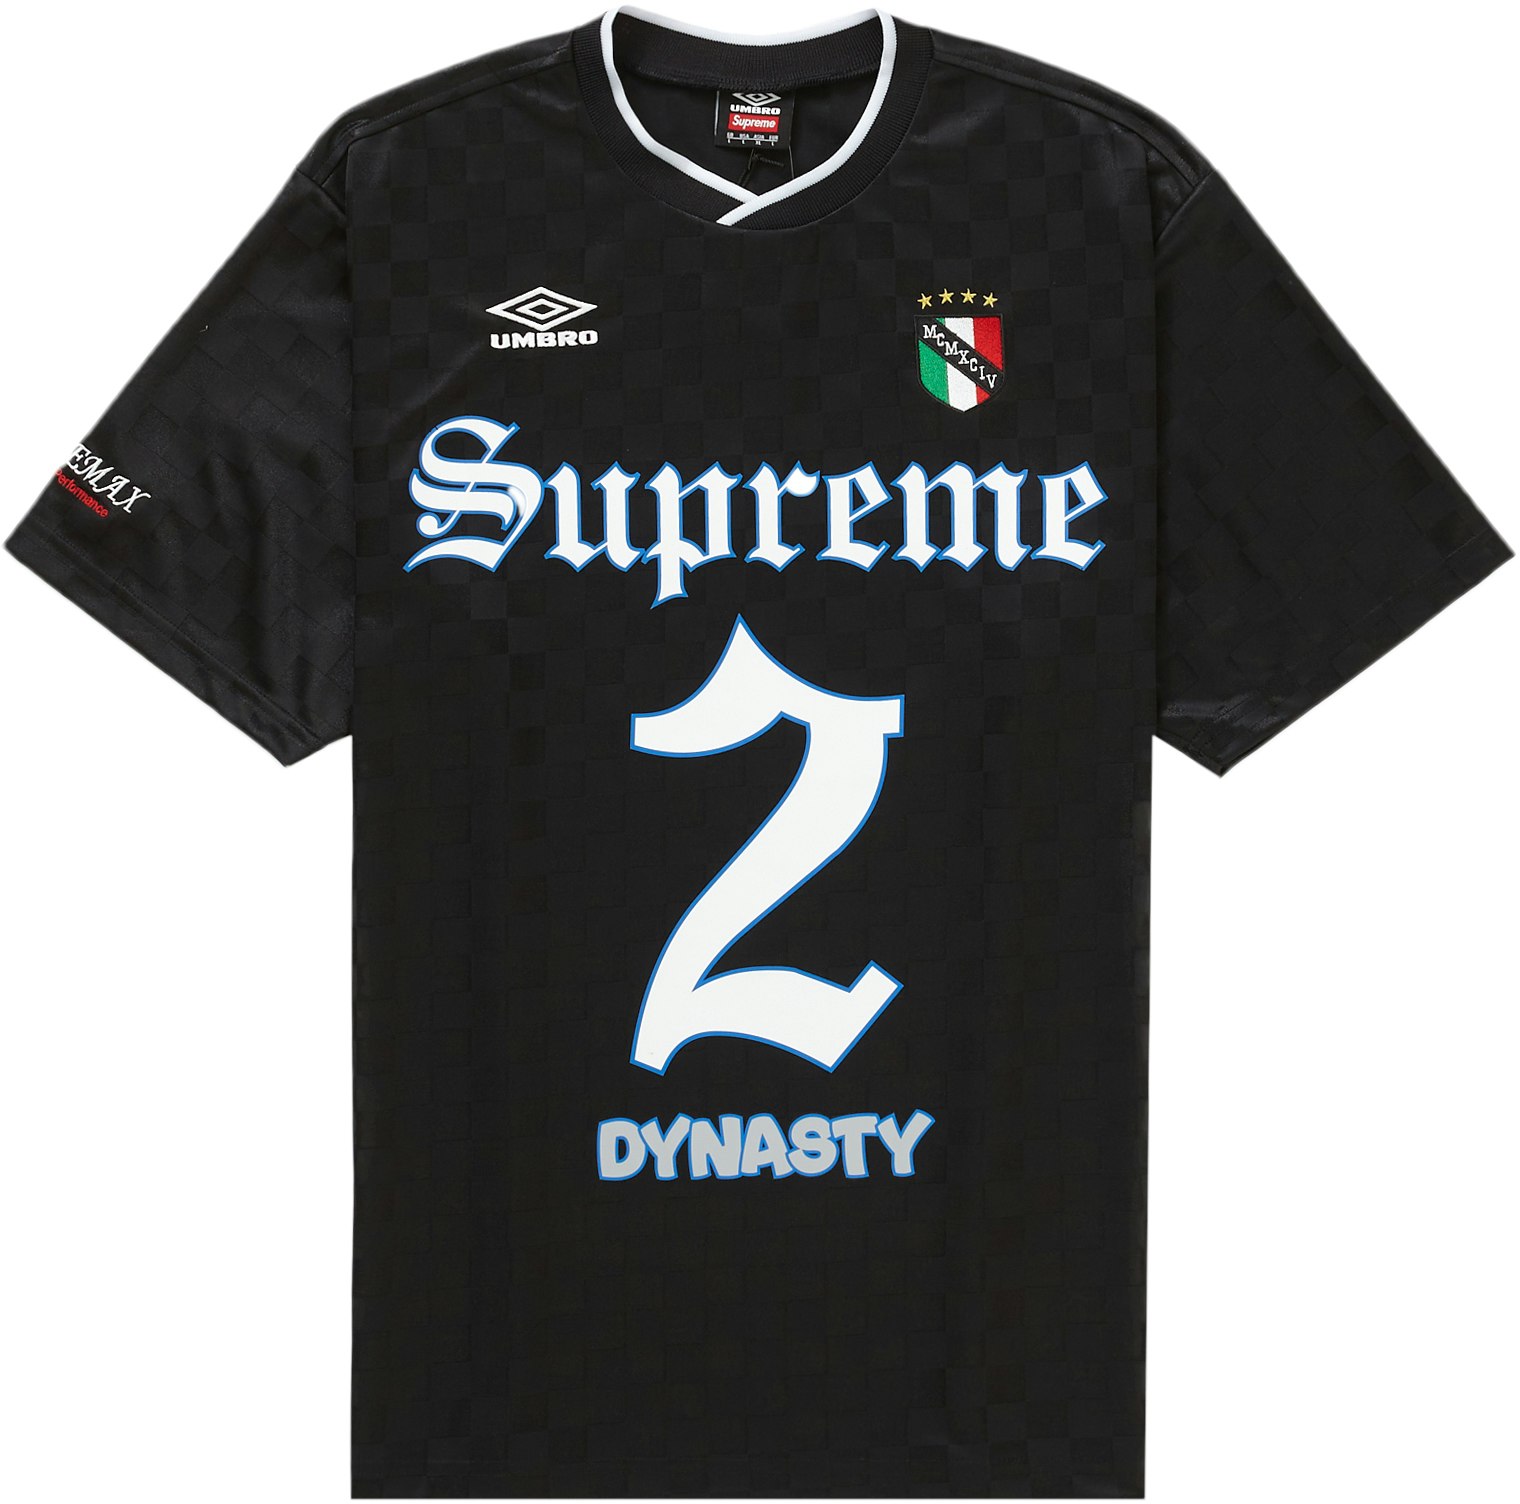 Supreme / Umbro Soccer Jersey Black